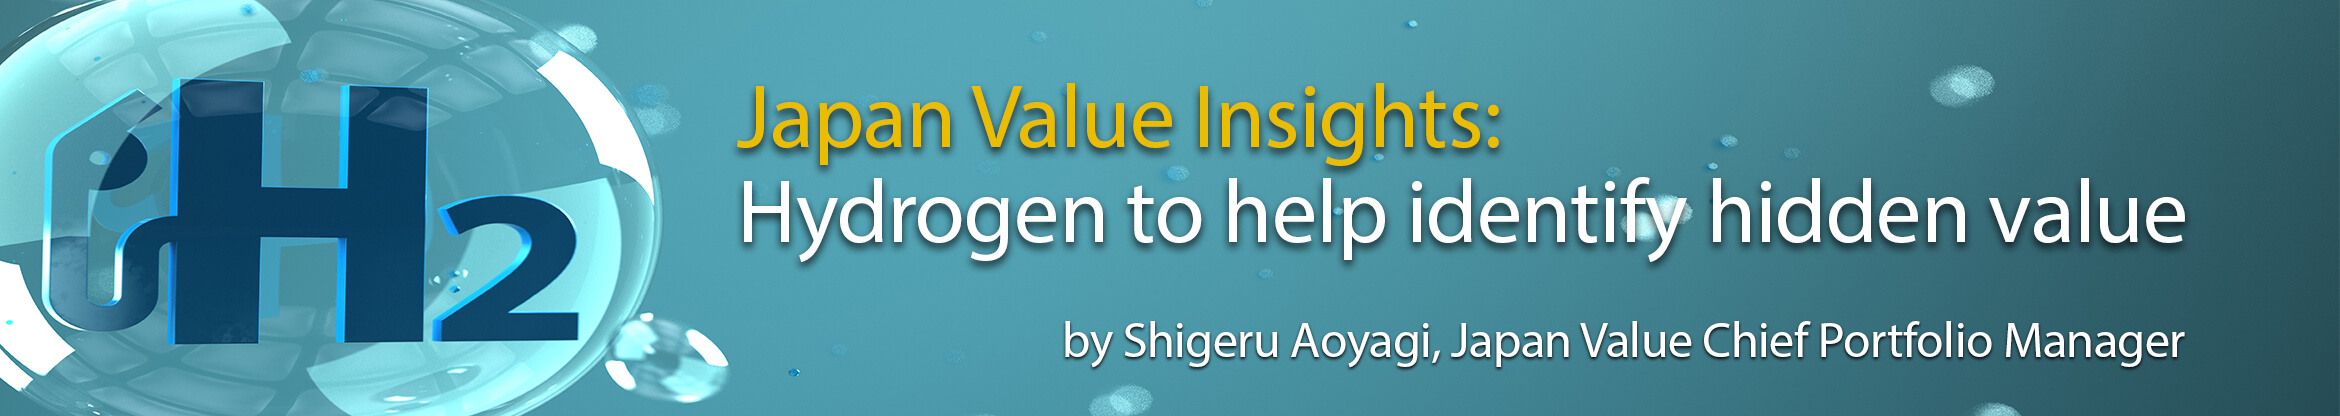 Japan Value Insights